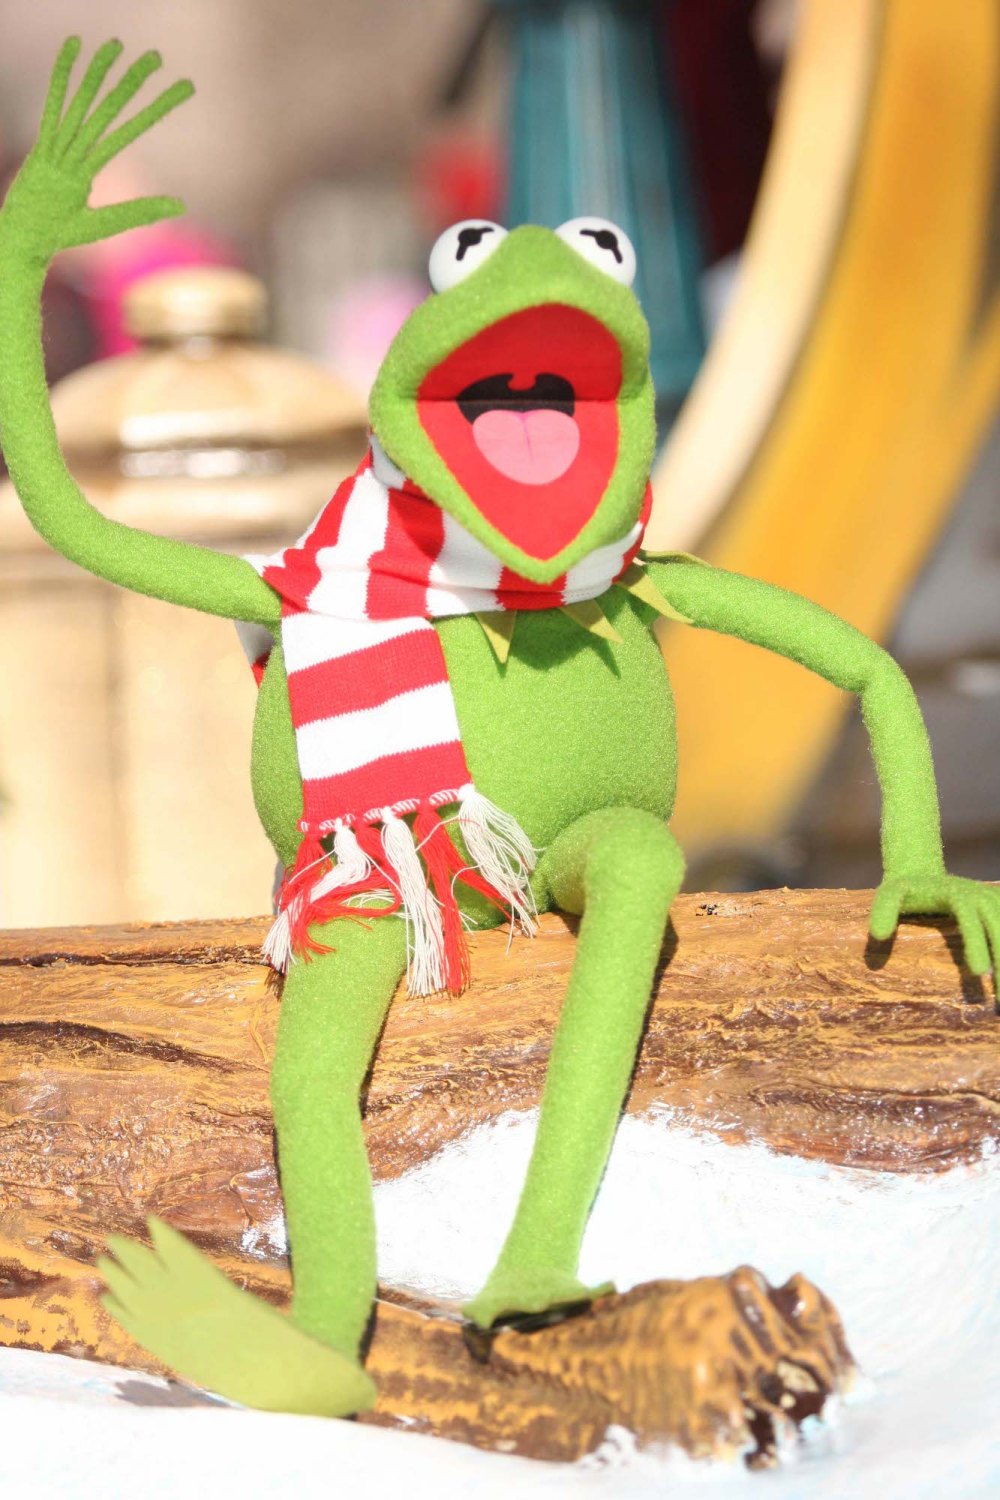 Patrick Mahomes Shuts Down Doing a Kermit the Frog Impression